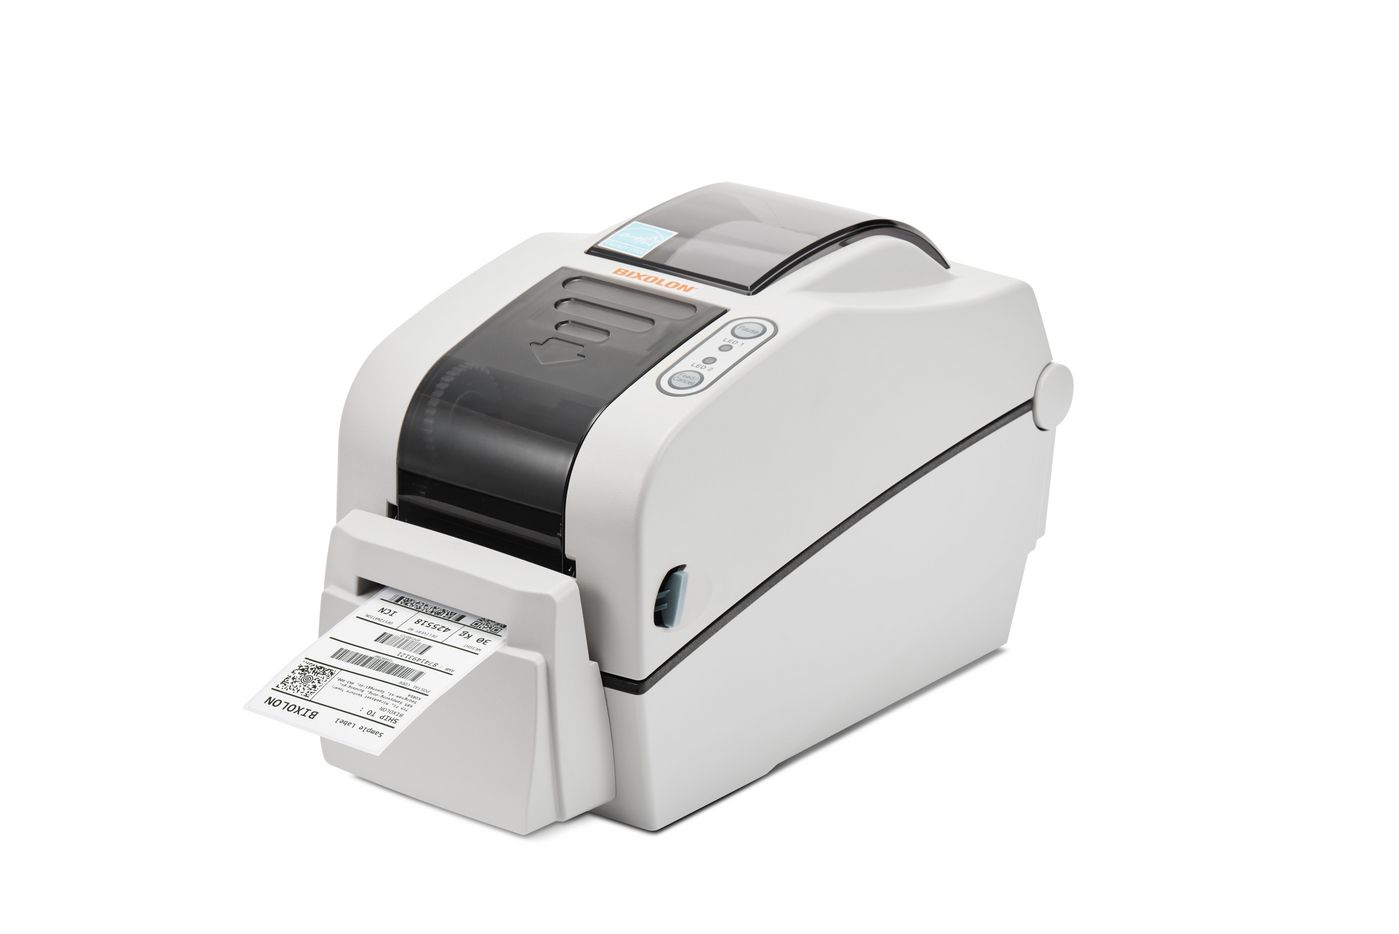 Slp-tx220d -  Label Printer - Direct Thermal - USB / Parallel